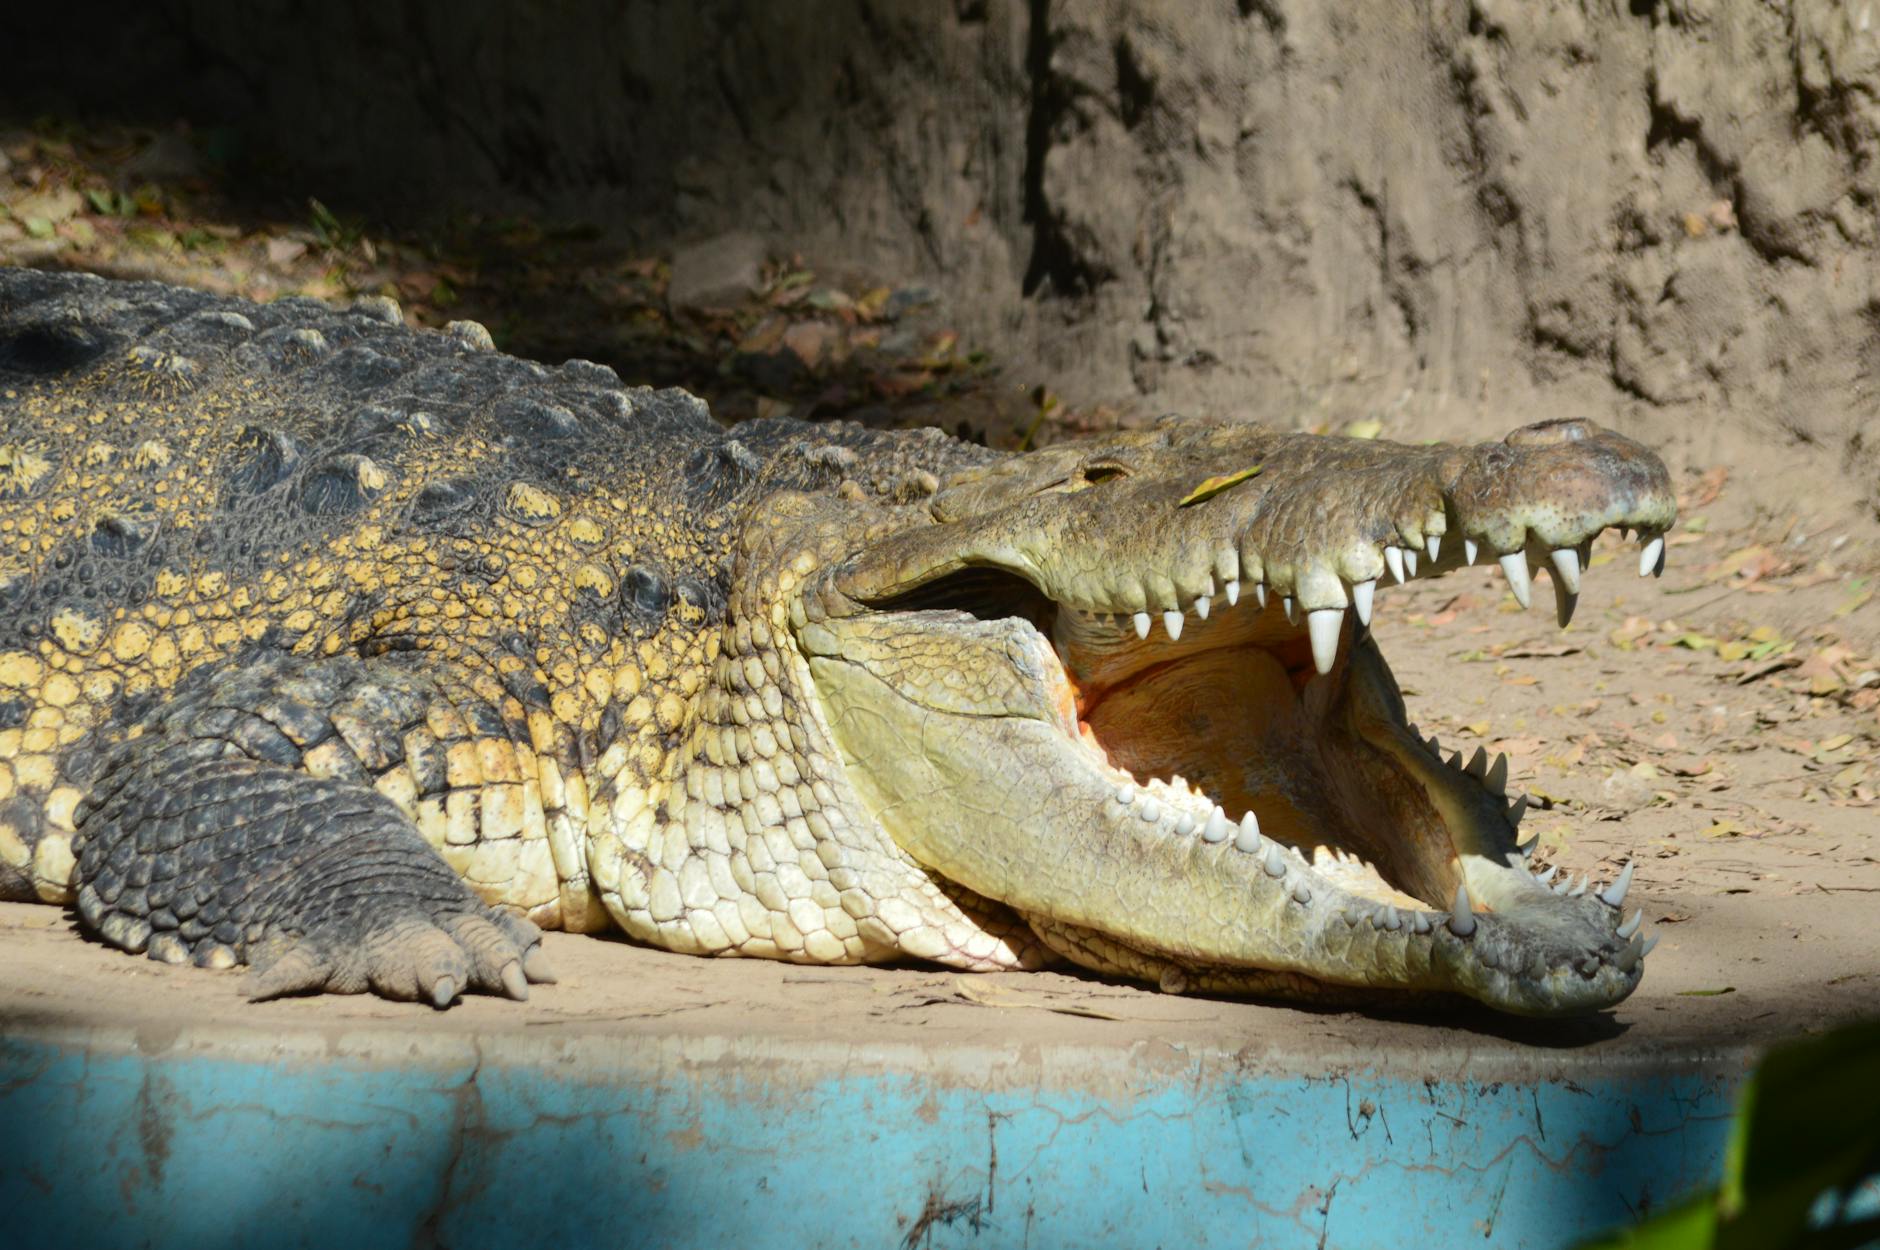 close up of crocodile